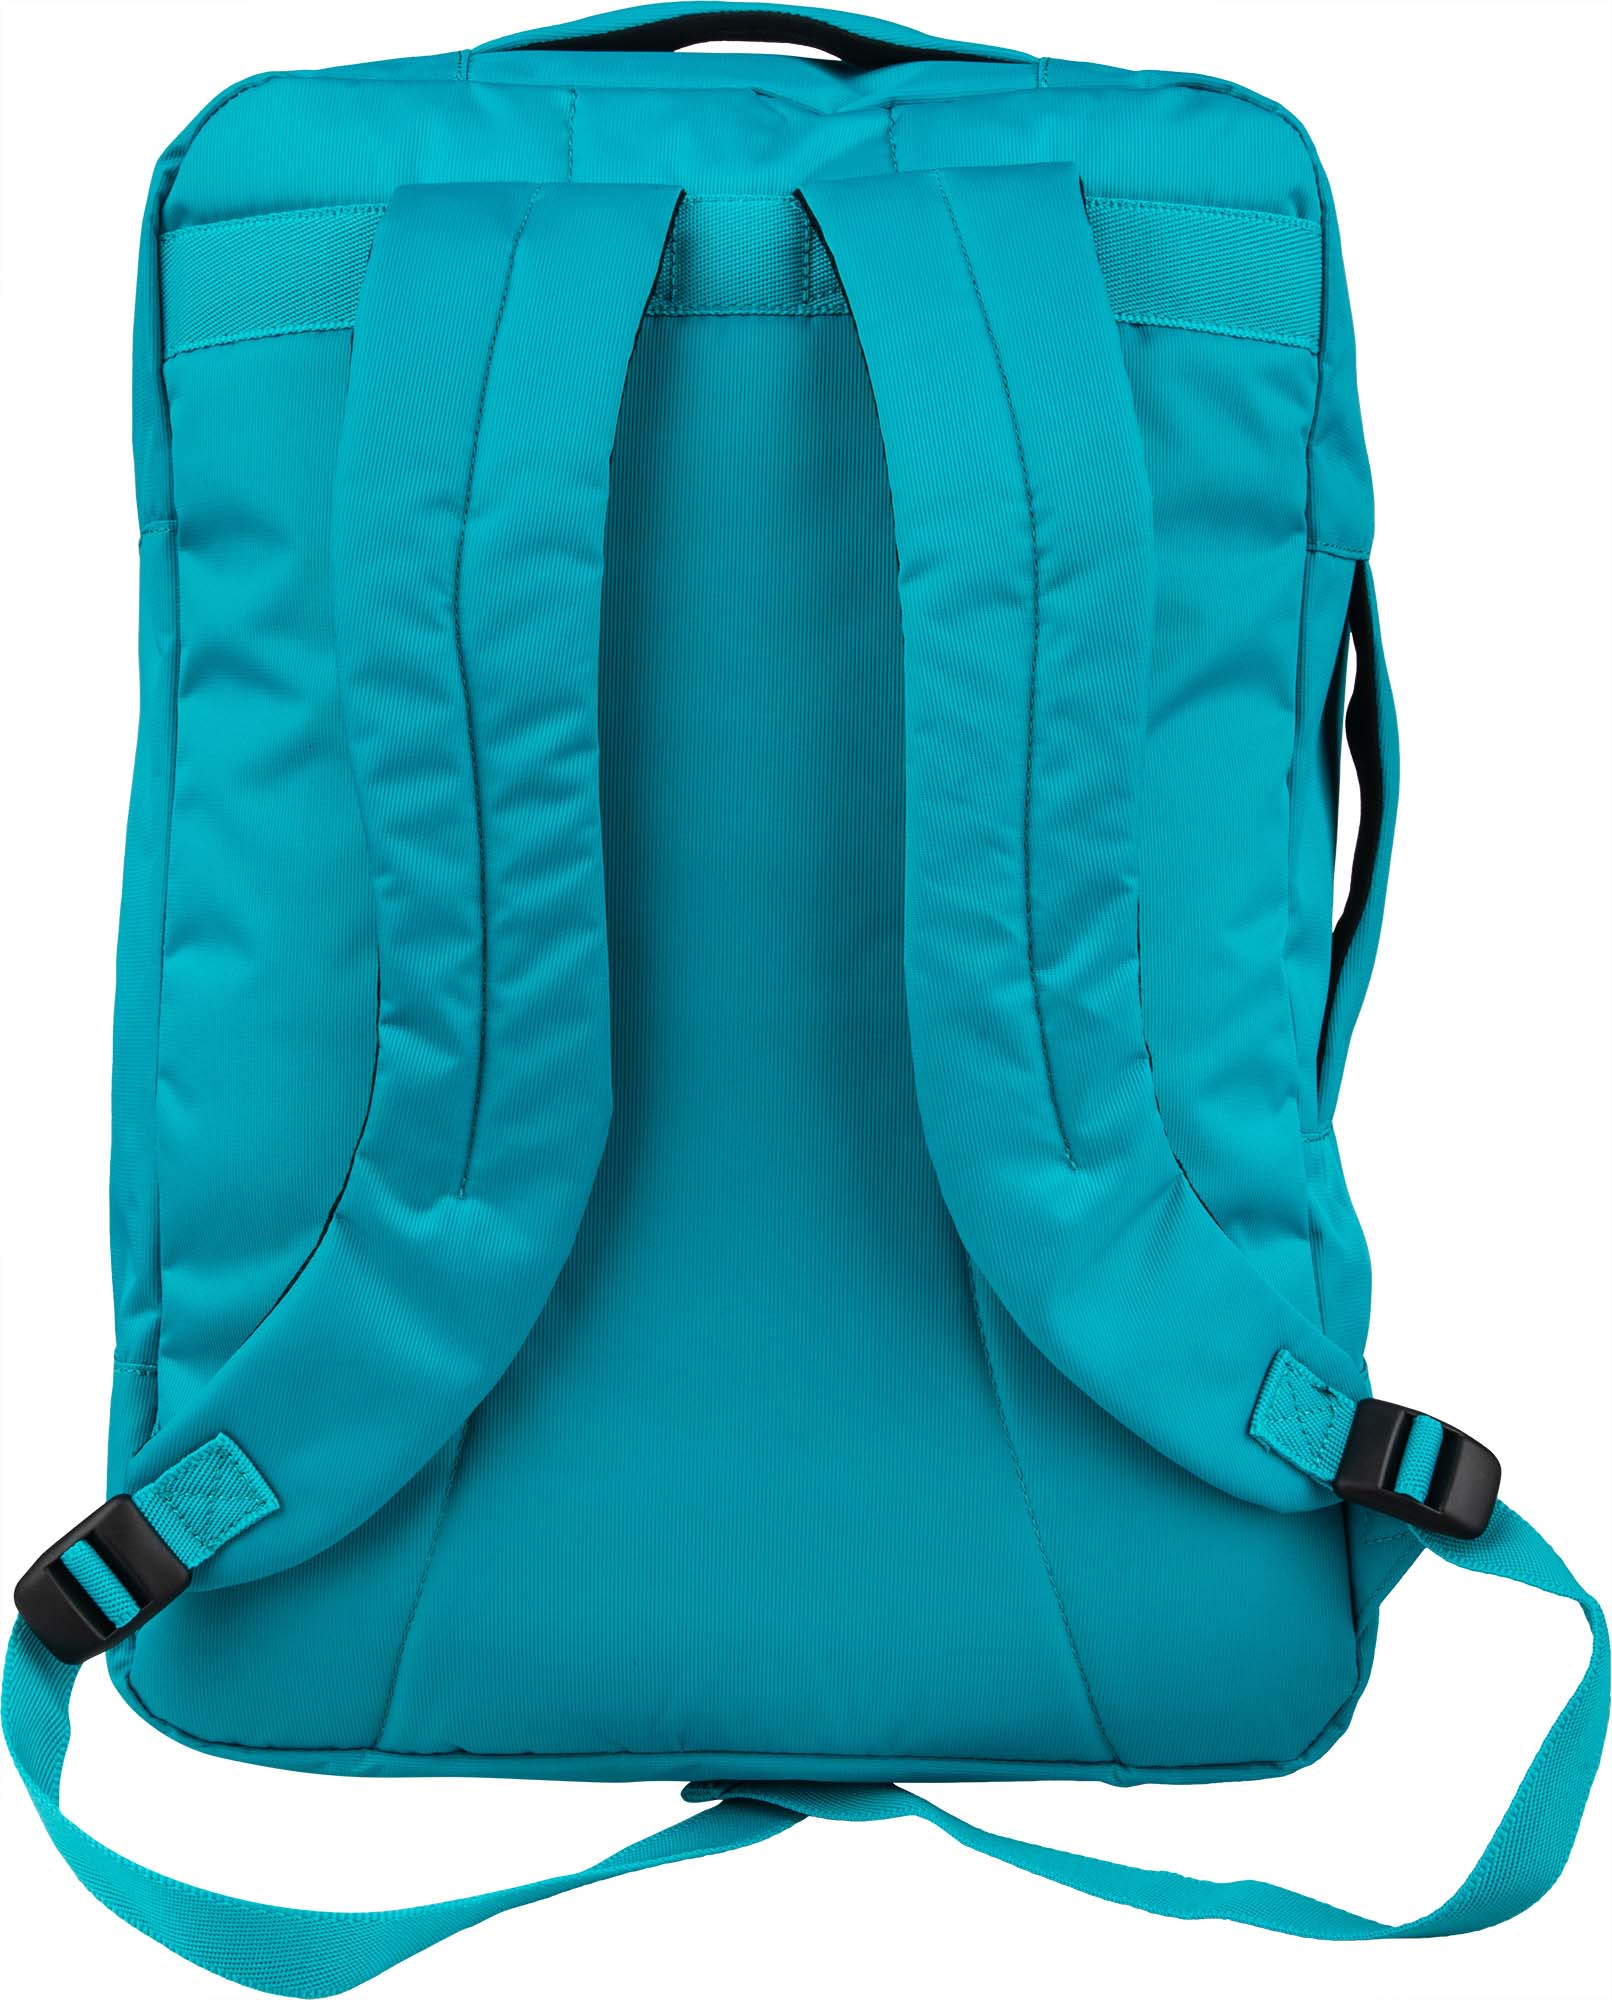 Cabin backpack